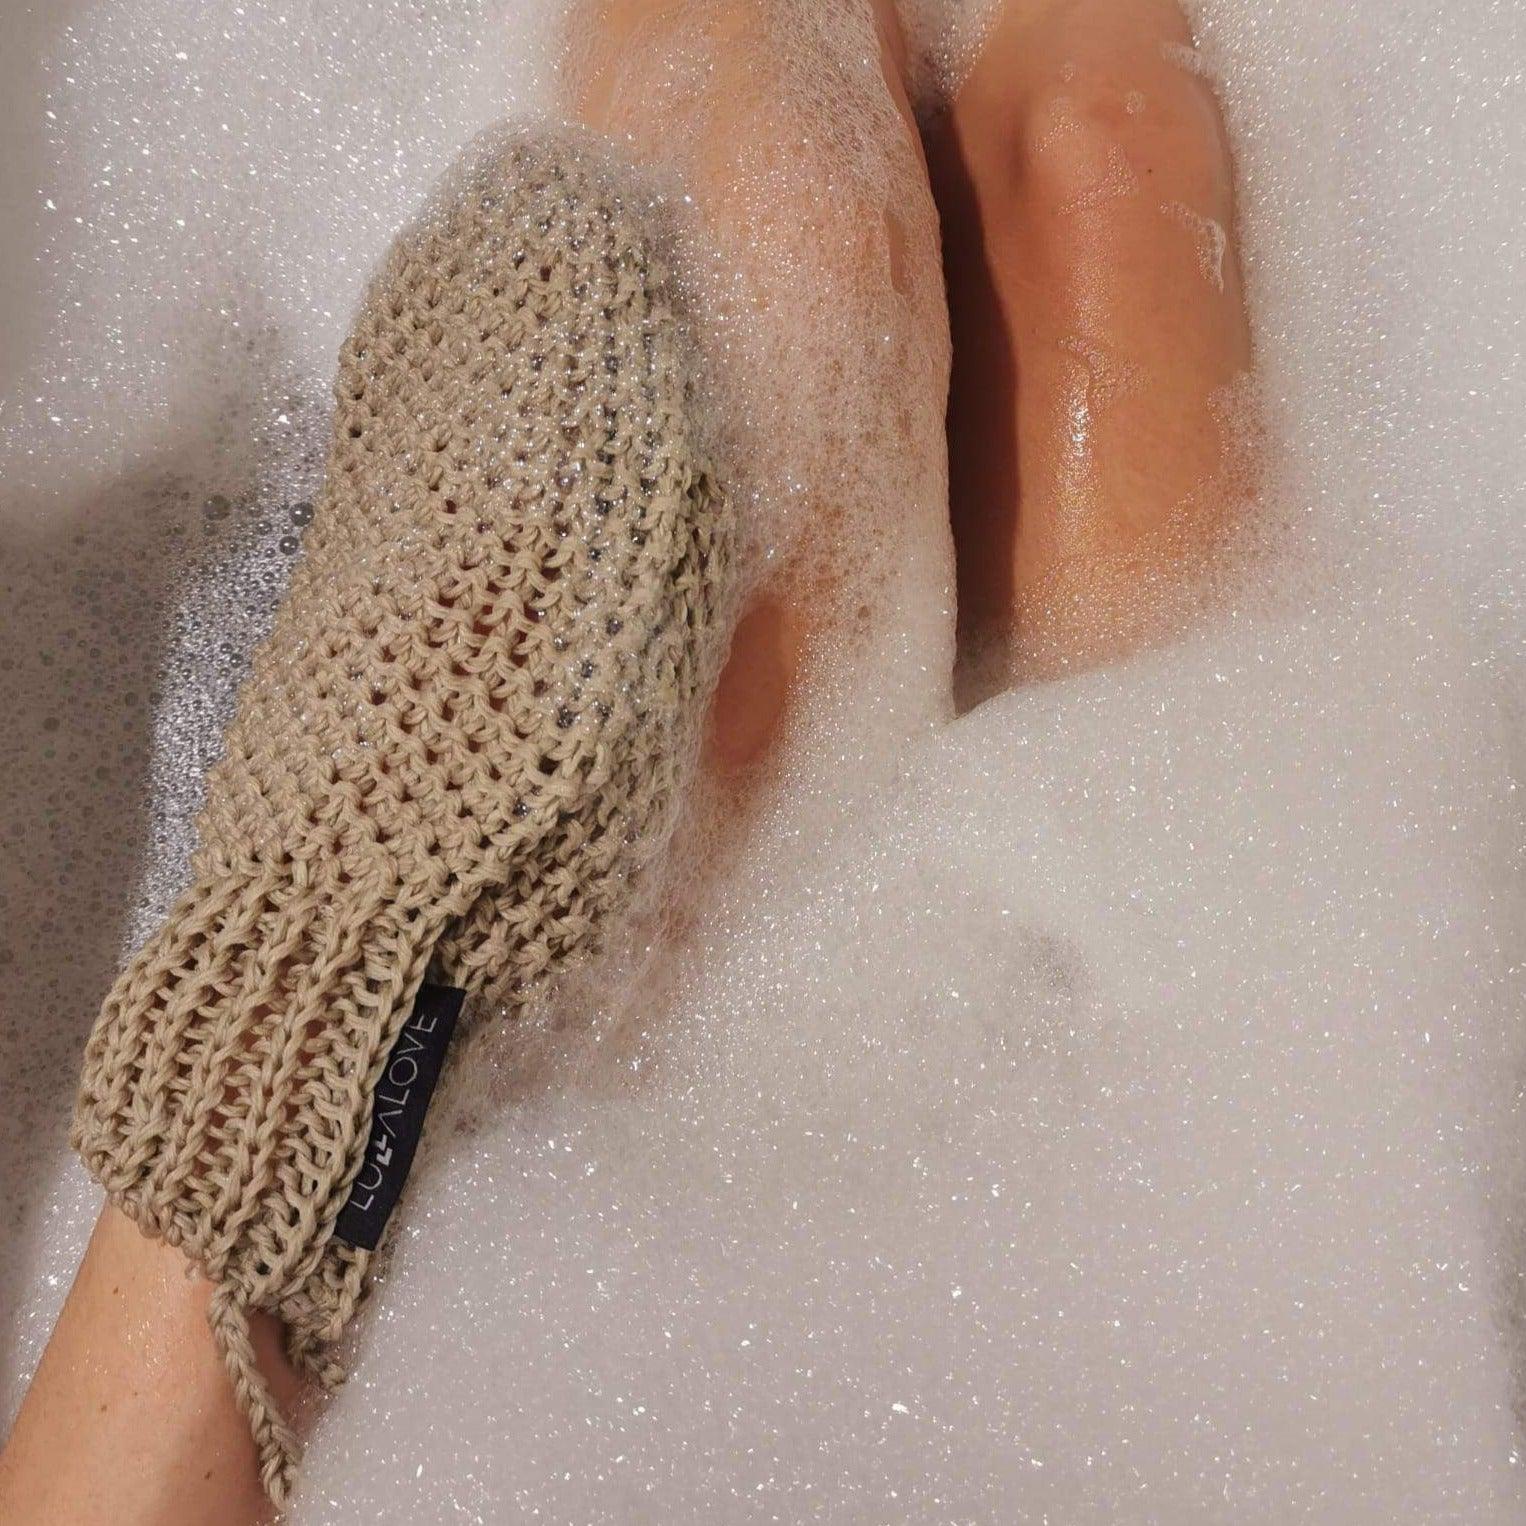 Lullalove: scrubbing and massage glove Flax Natural